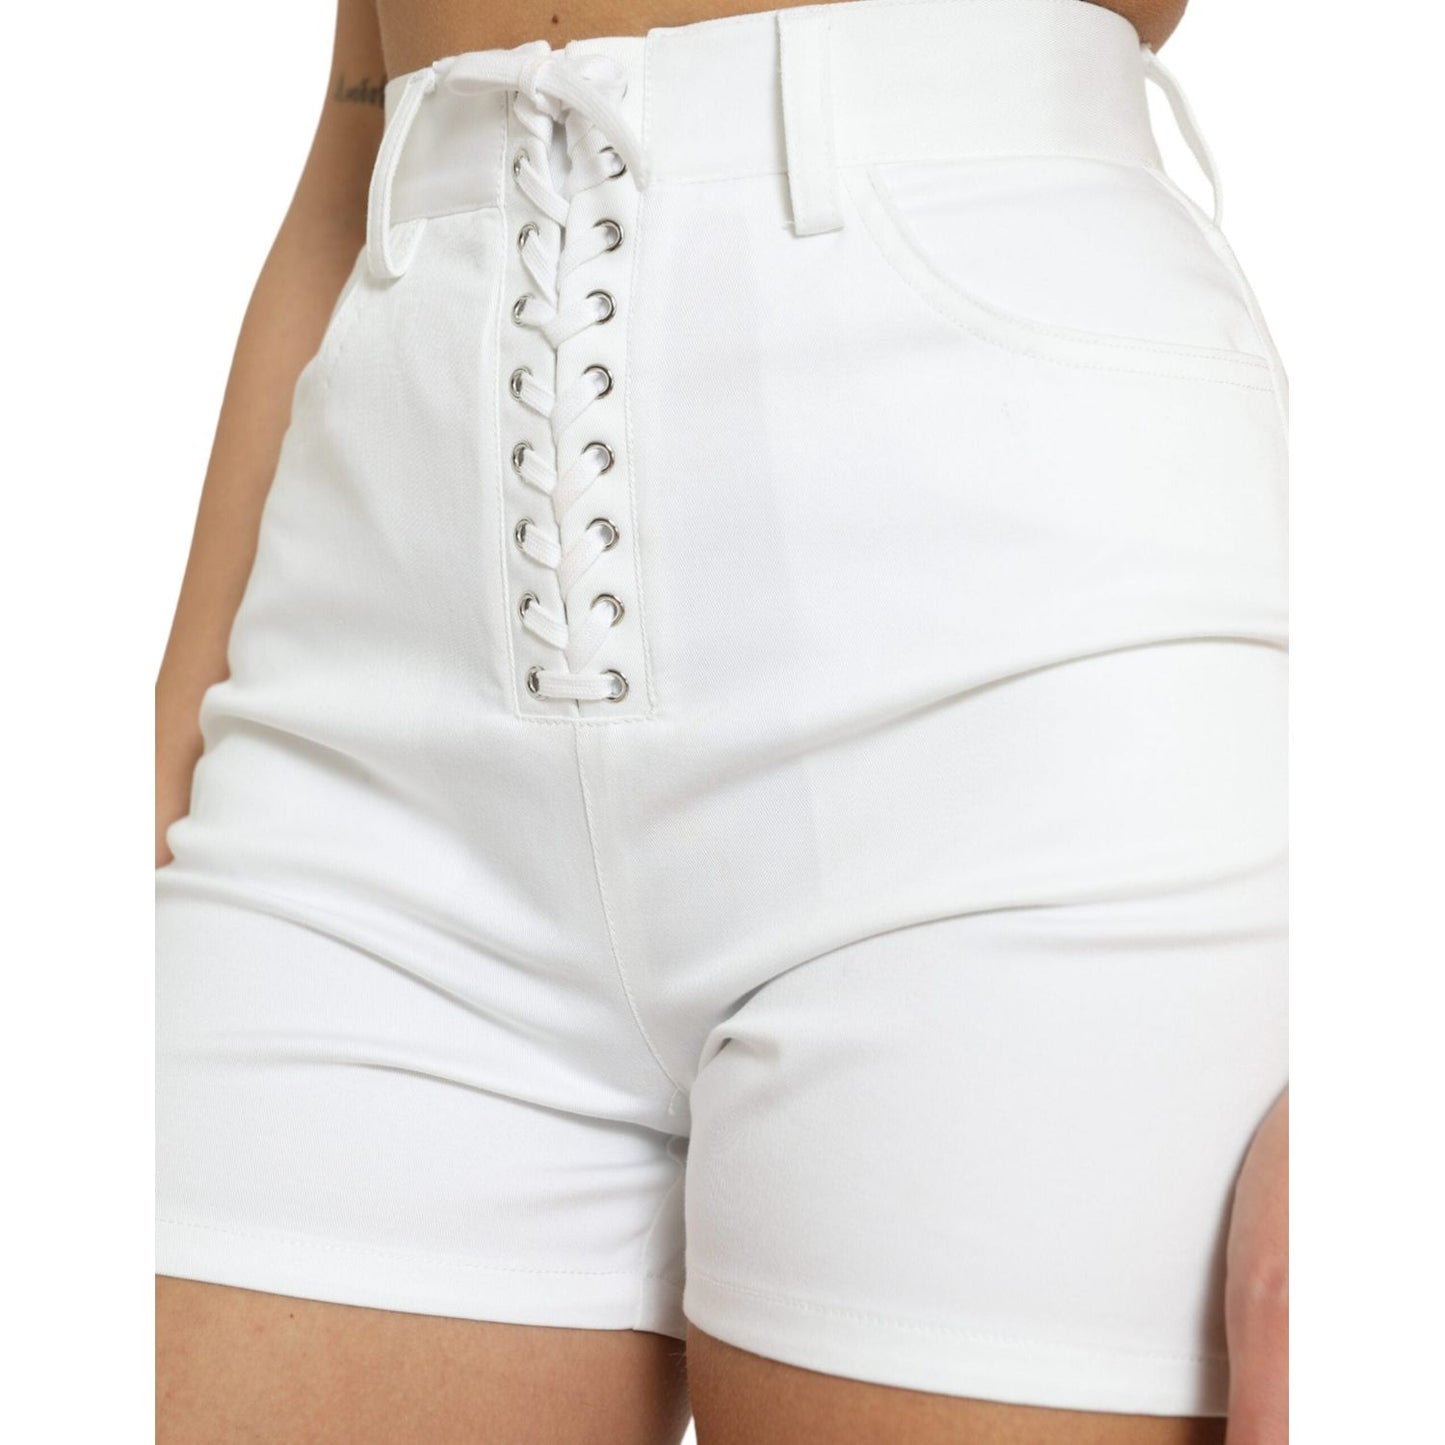 Dolce & Gabbana Chic High Waist Lace Closure Shorts white-front-lace-high-waist-hot-pants-shorts